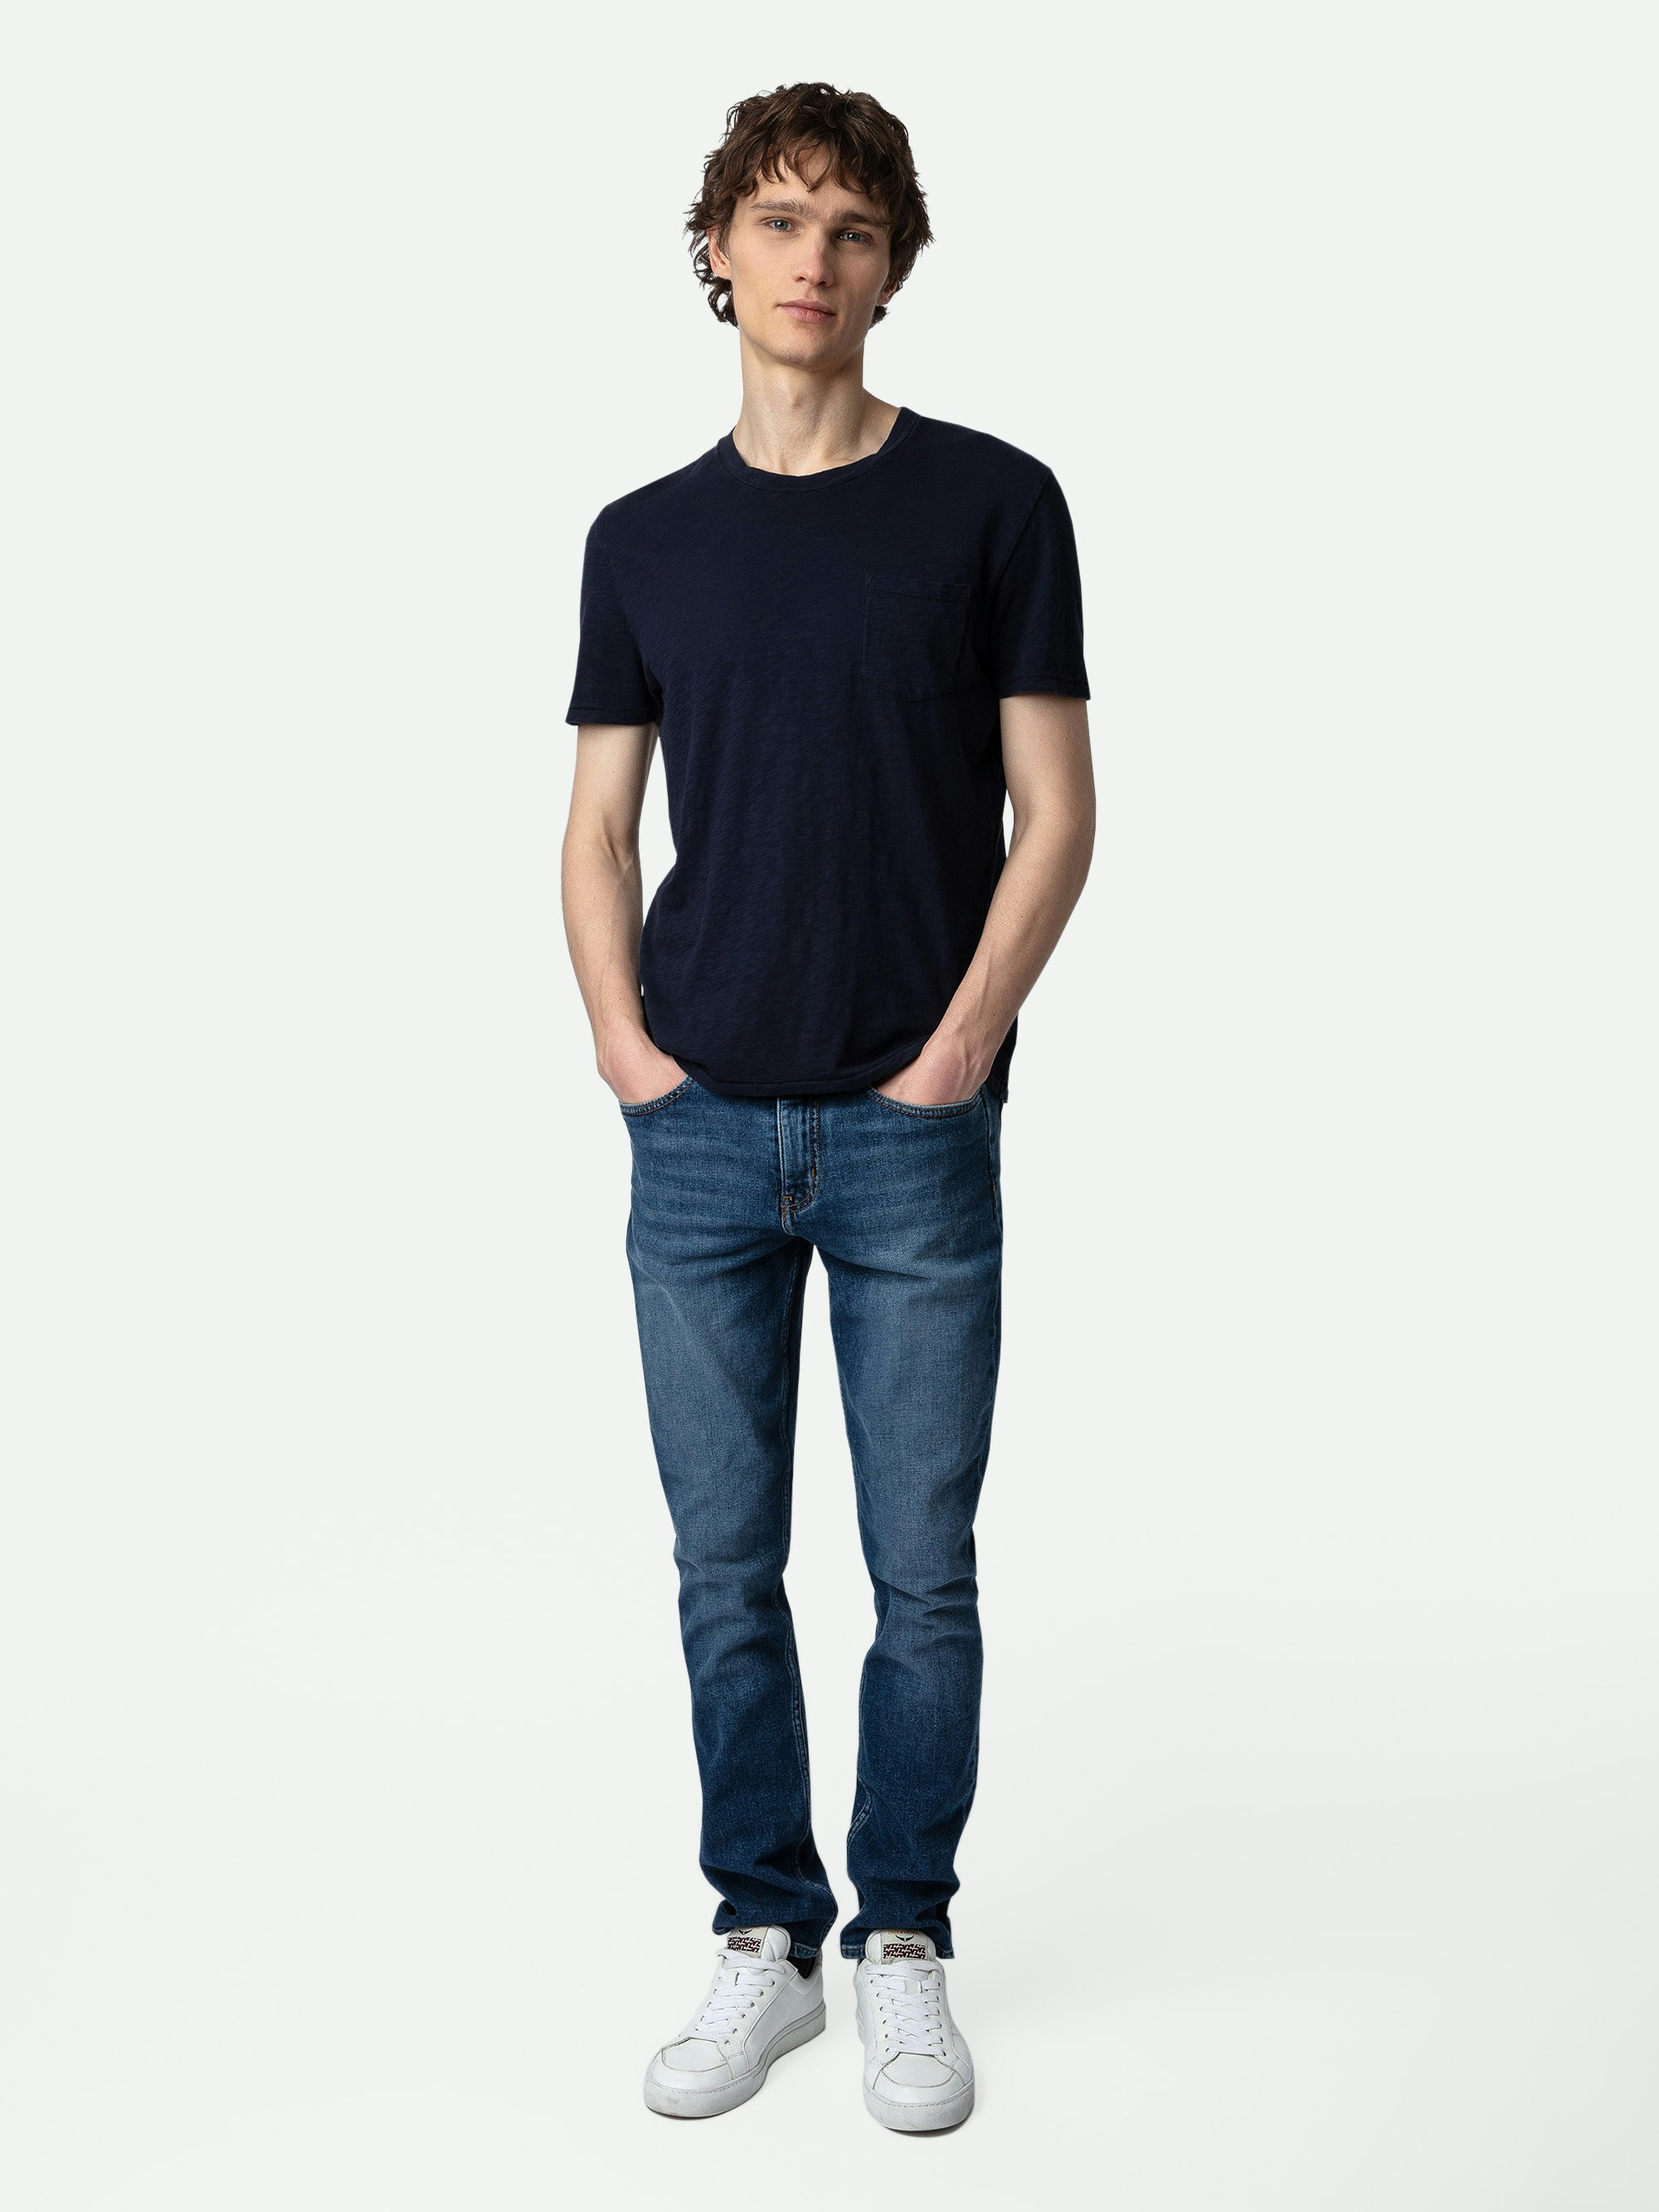 T-Shirt Stockholm - Blaues Herren-T-Shirt.